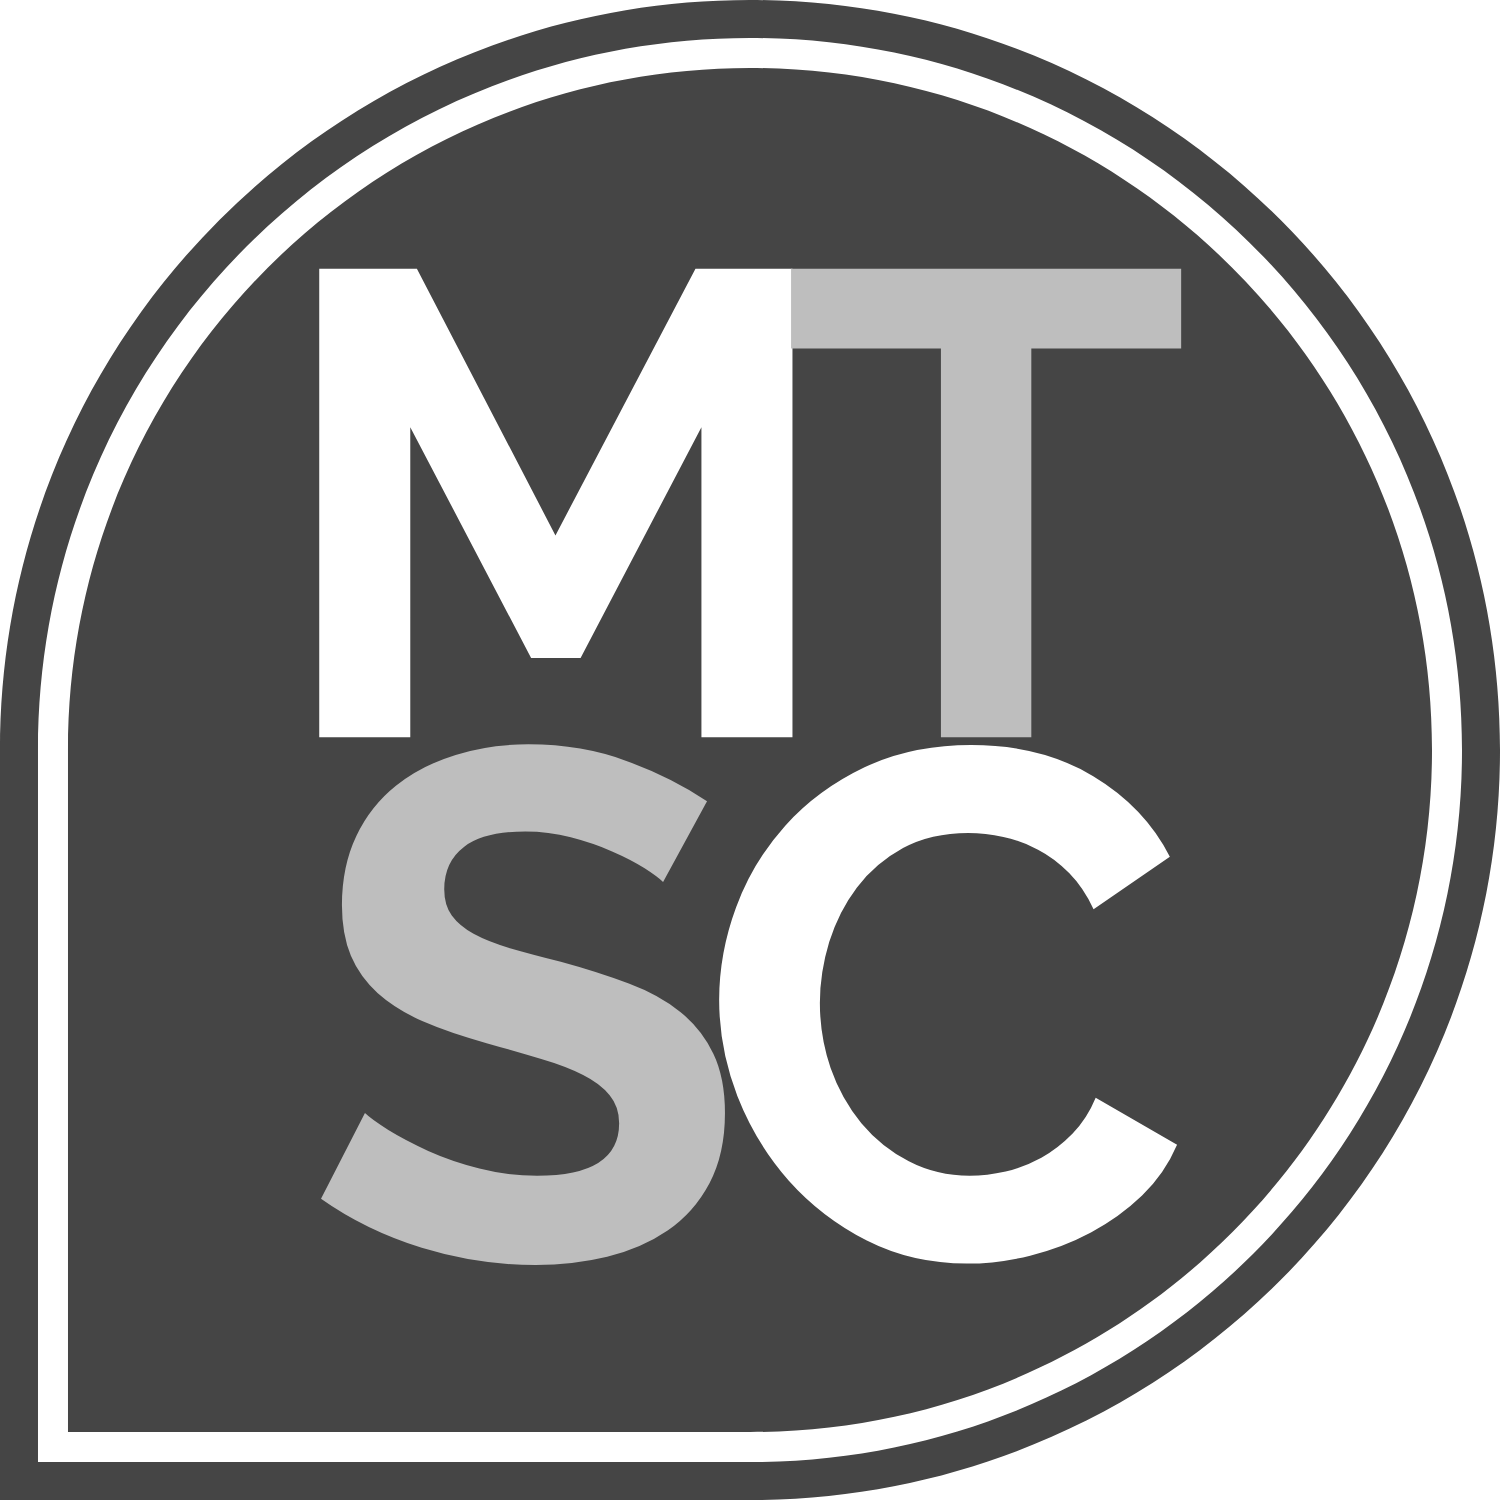 MTSC Marketing Solutions